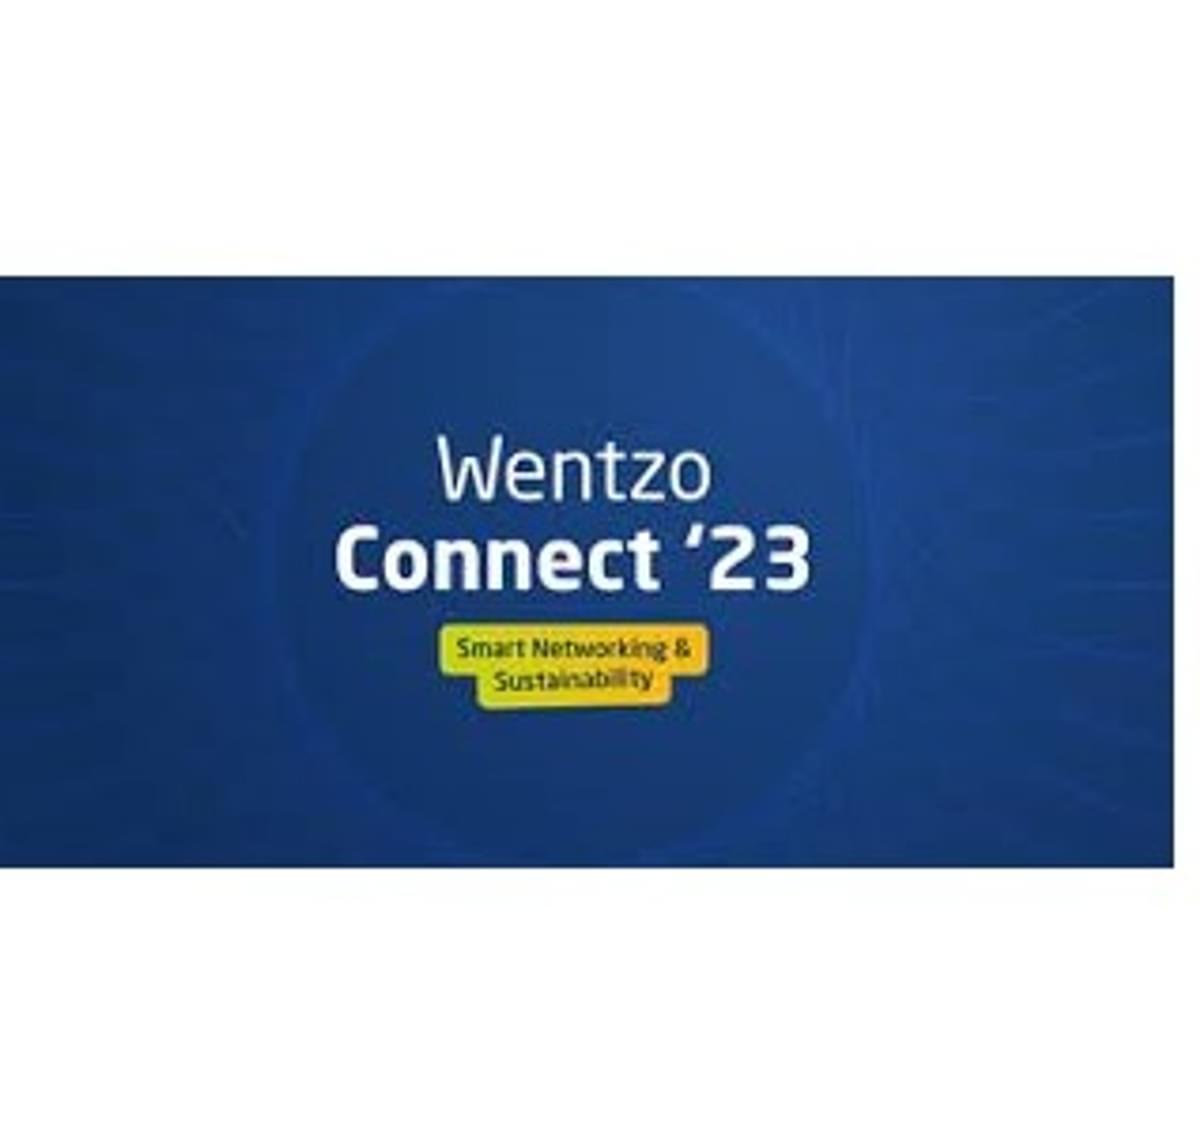 Wentzo Connect '23: Smart Networking & Sustainability image